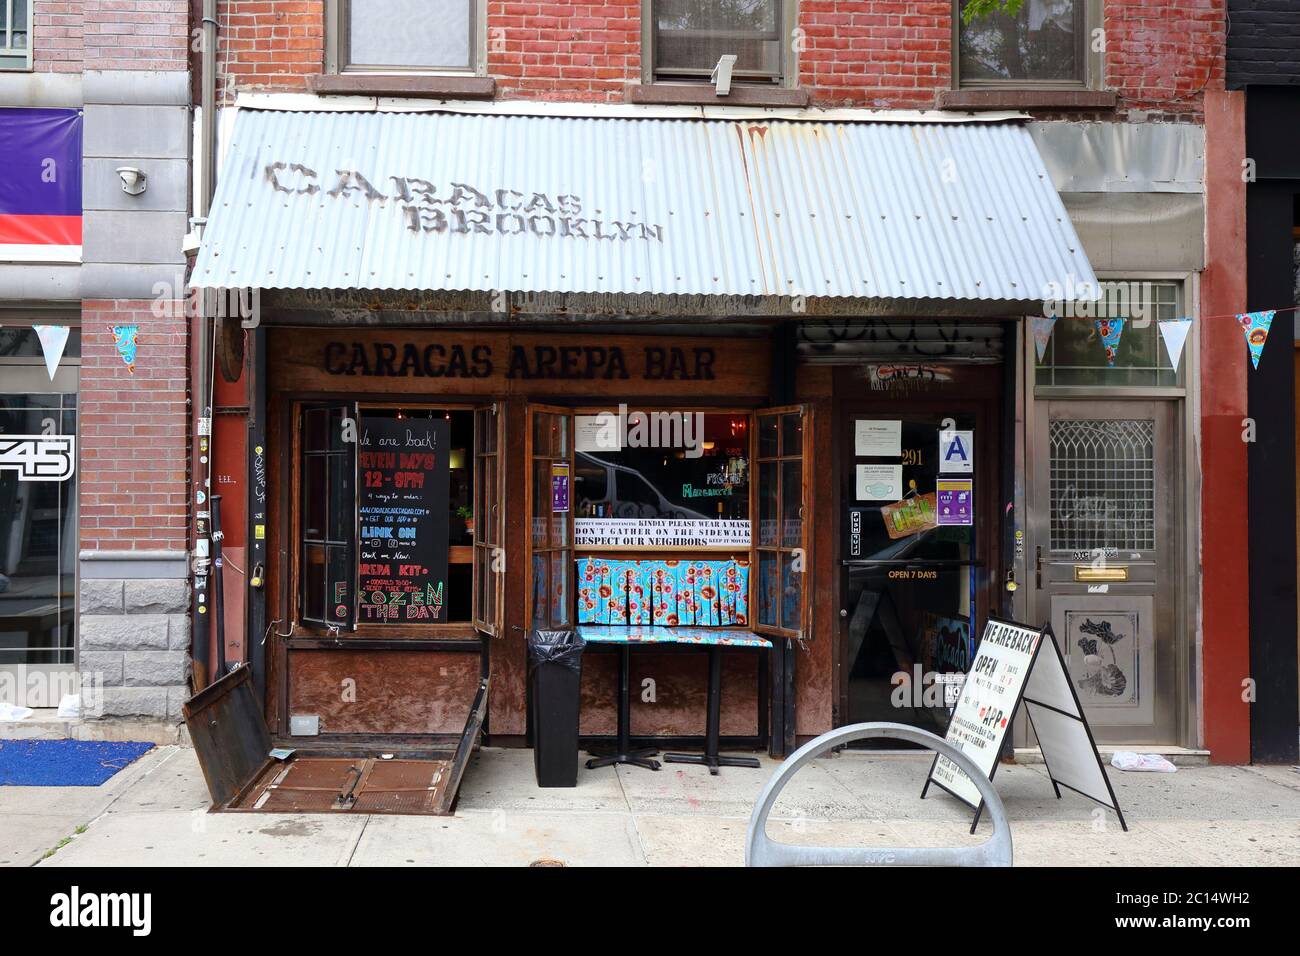 Caracas Arepa Bar, 291 Grand Street, Brooklyn, New York. New York photo d'un restaurant vénézuélien dans le quartier de Williamsburg. Banque D'Images